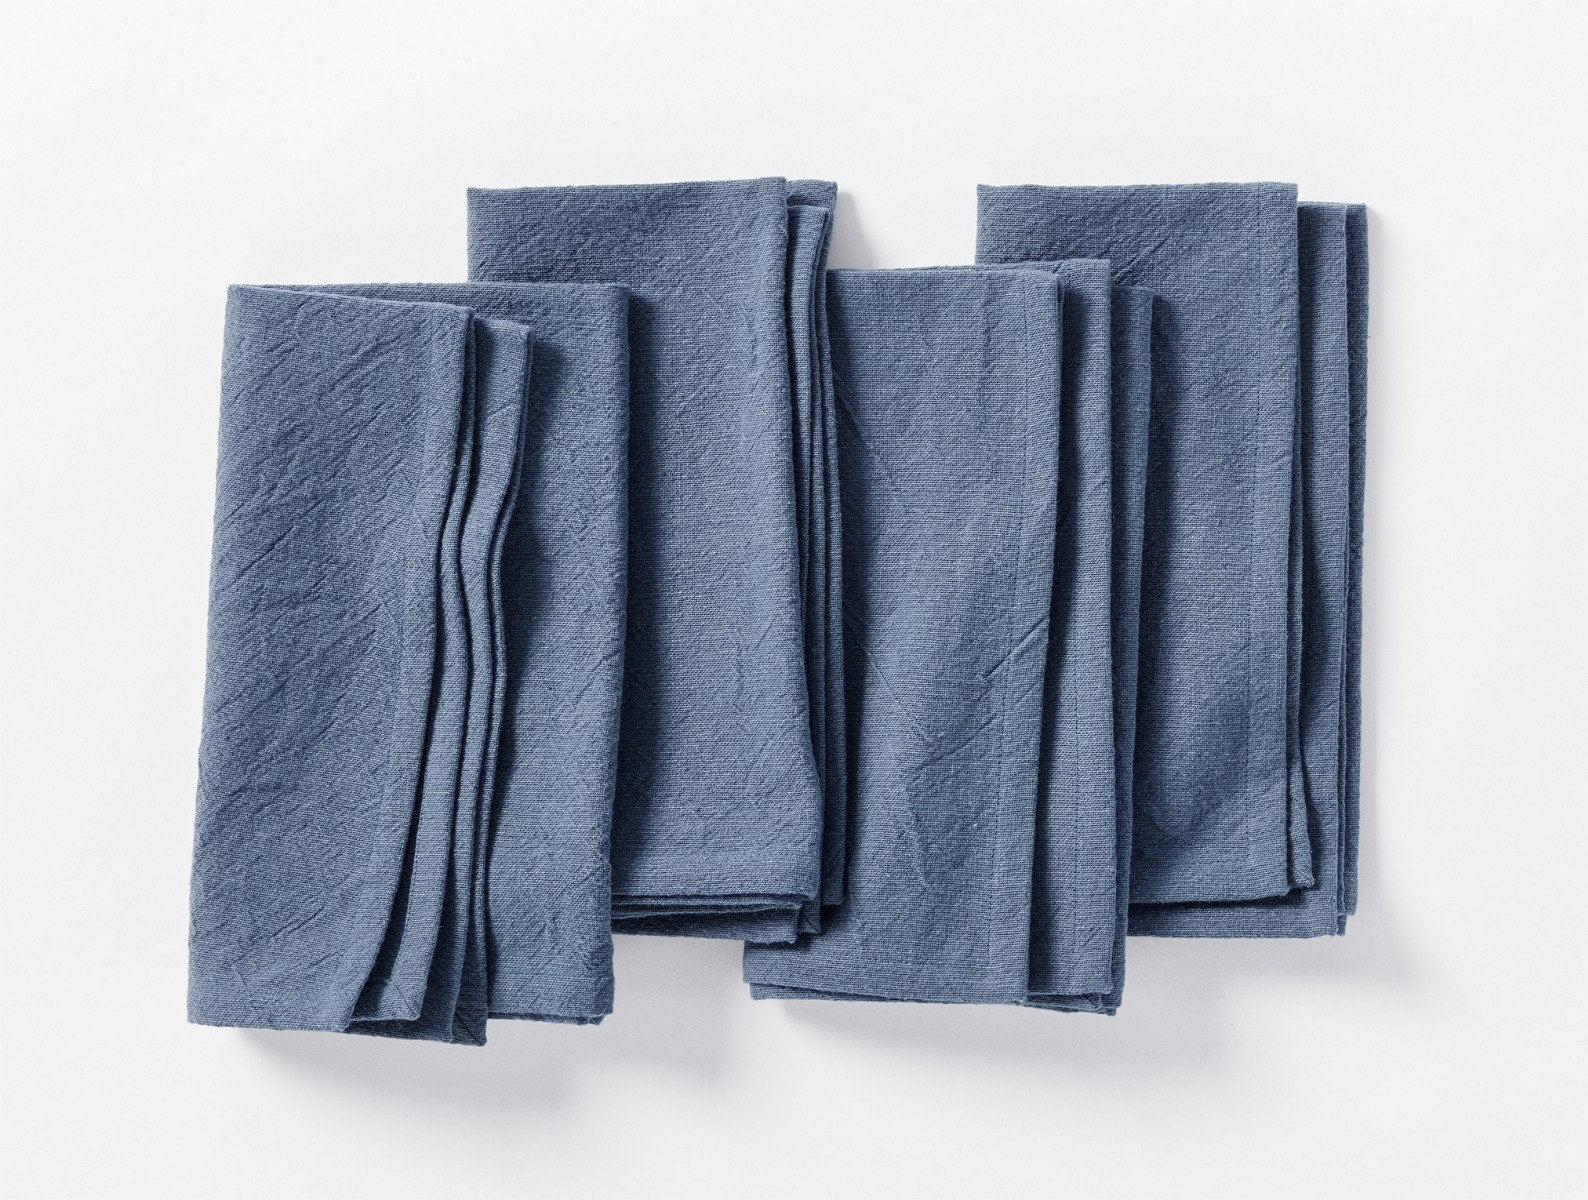 E-Cloth Blue Classic Check Dish Towel